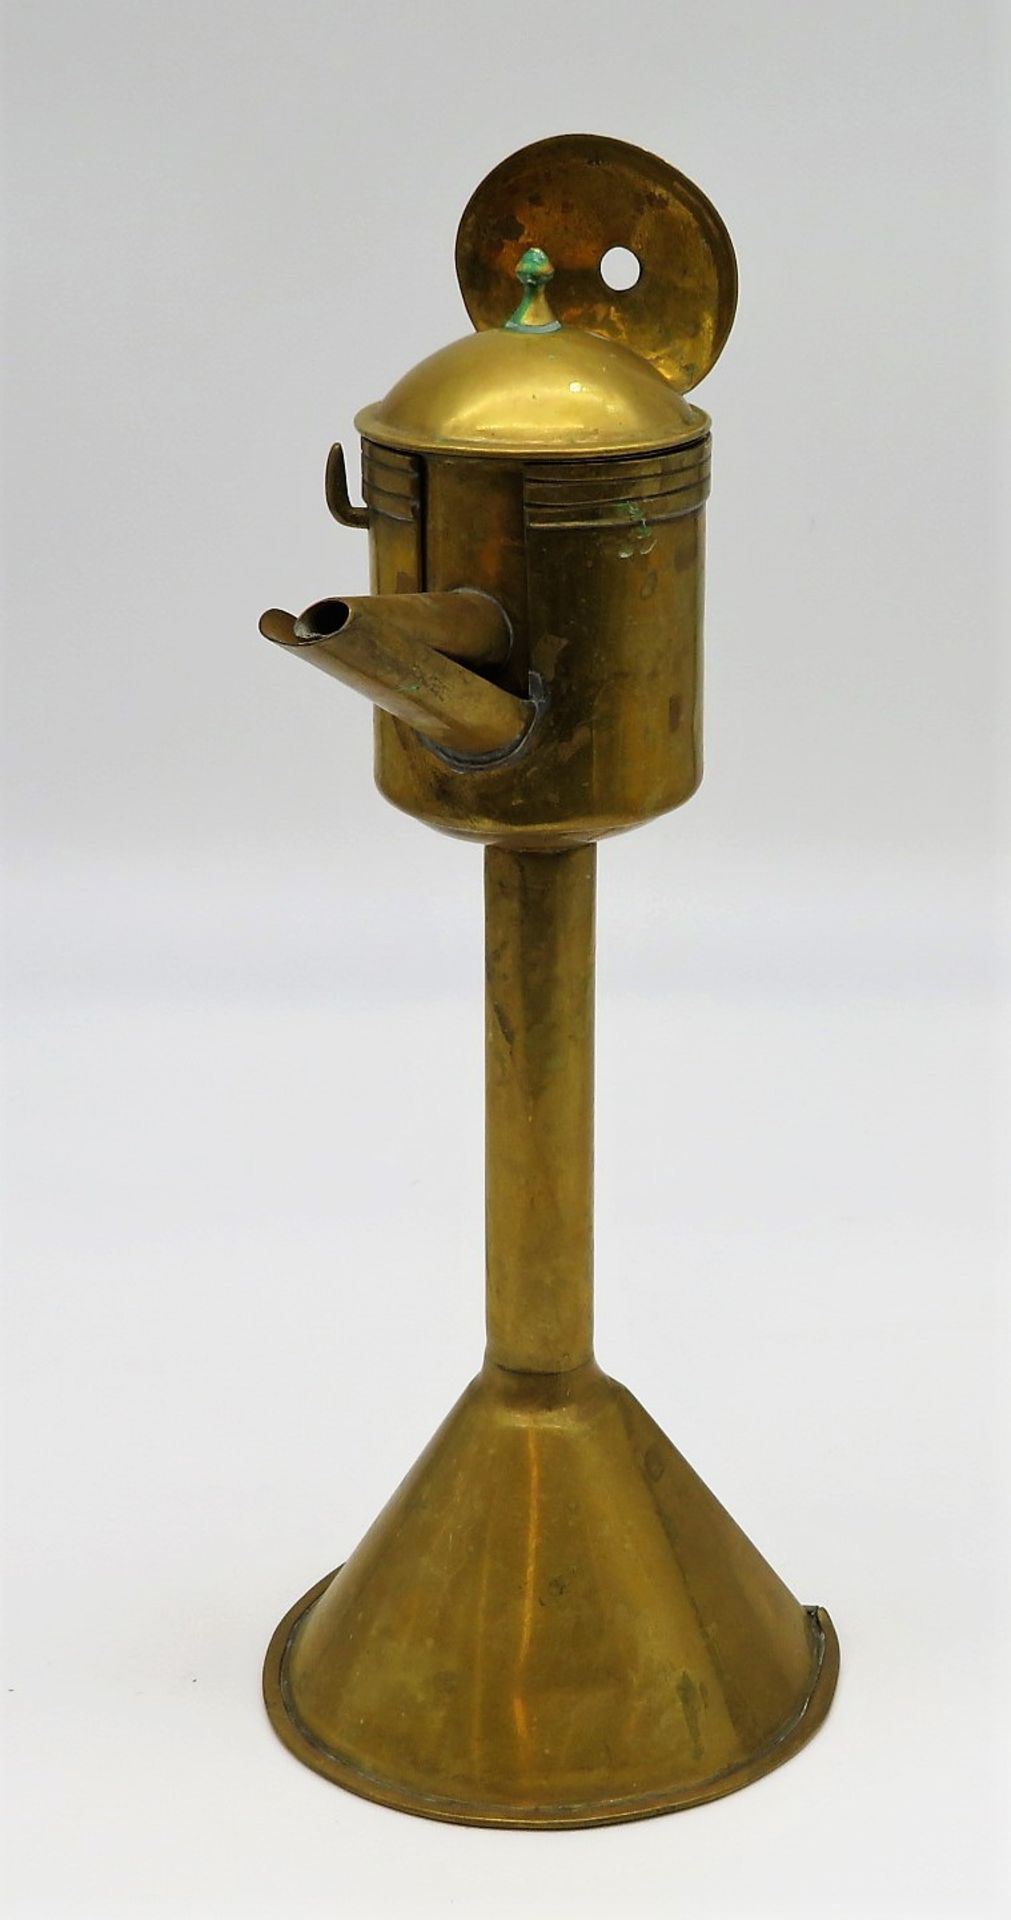 Öllampe, sog. "Rotznase", um 1900, Messing, h 29,5 cm, d 12 cm.